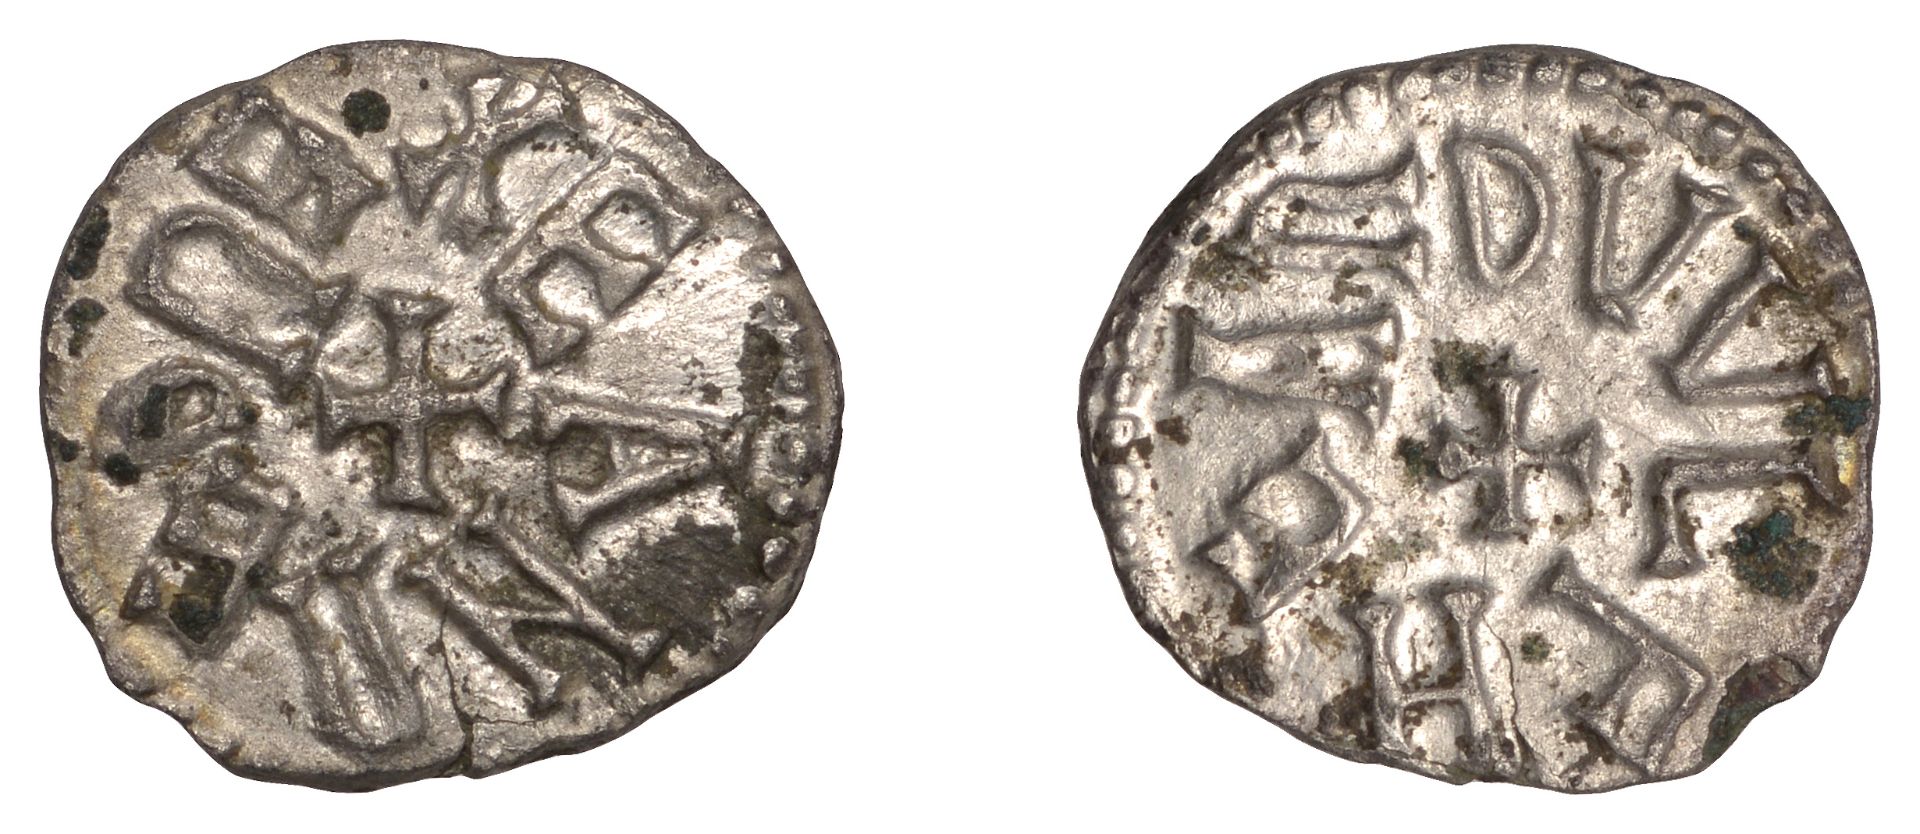 Kings of Northumbria, Eanred (810-41), base Sceatta or Penny, phase I, Wulfheard, eanred rex...